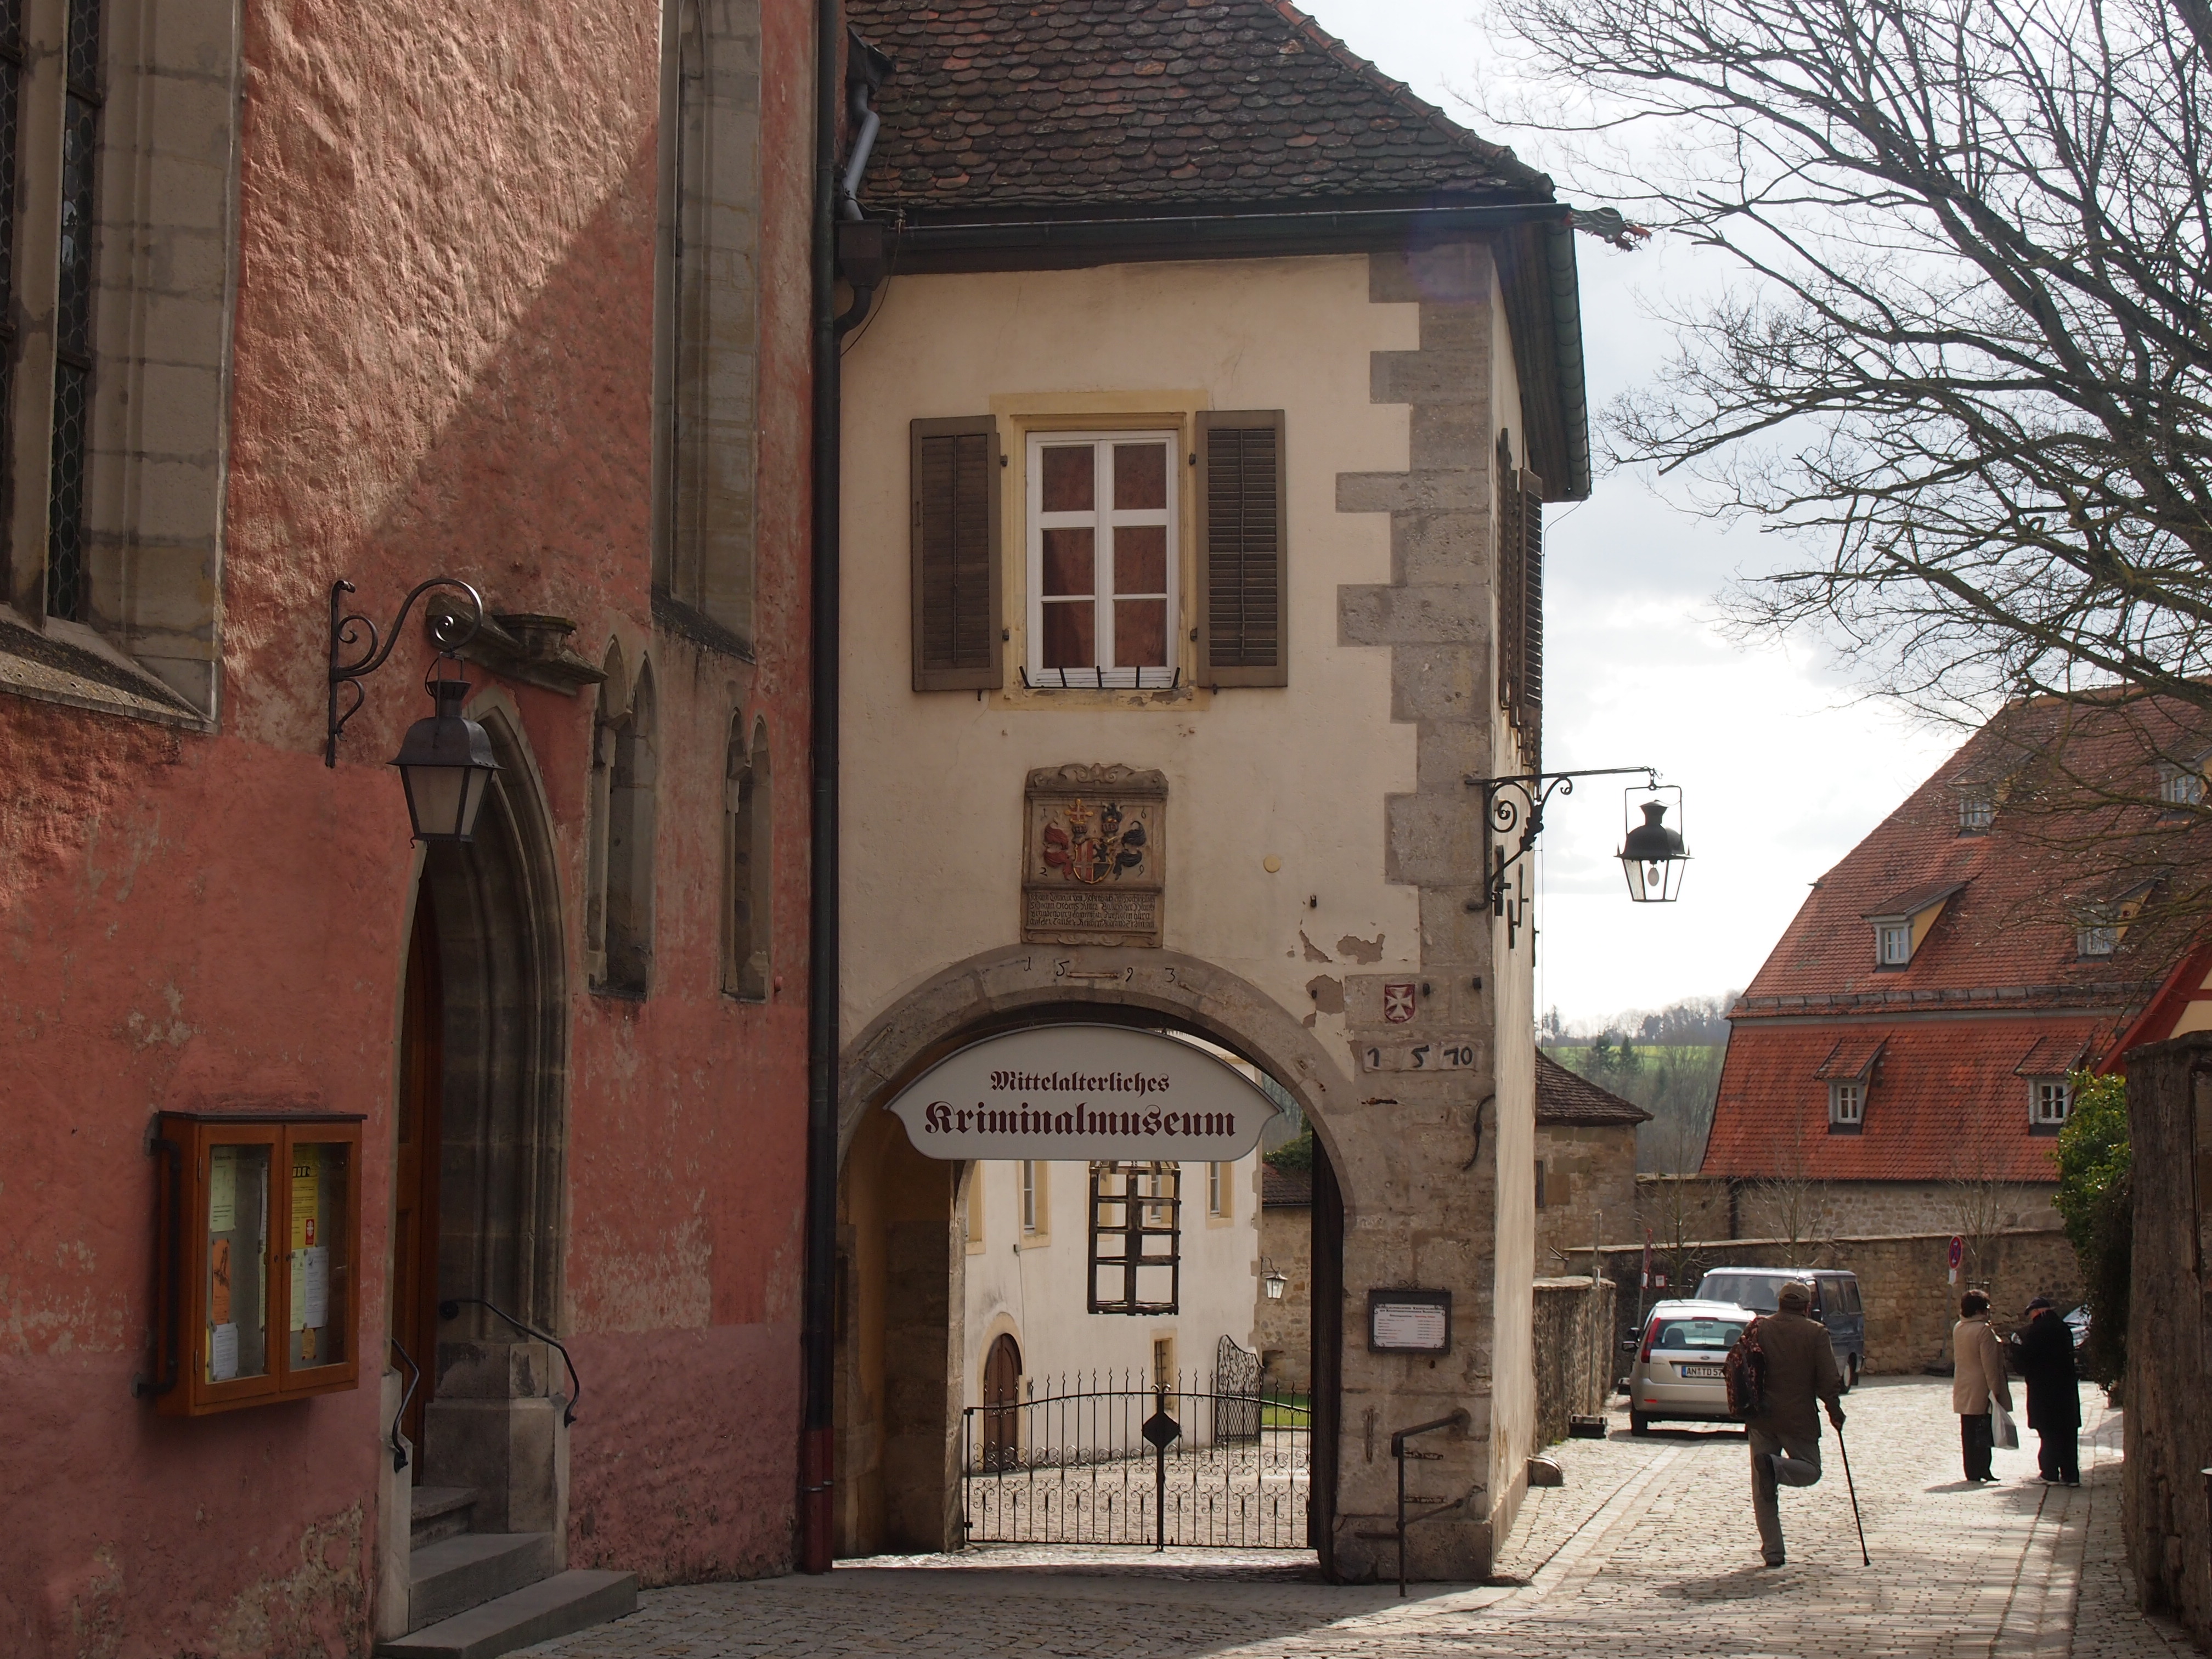 Rothenburg criminal museum photo